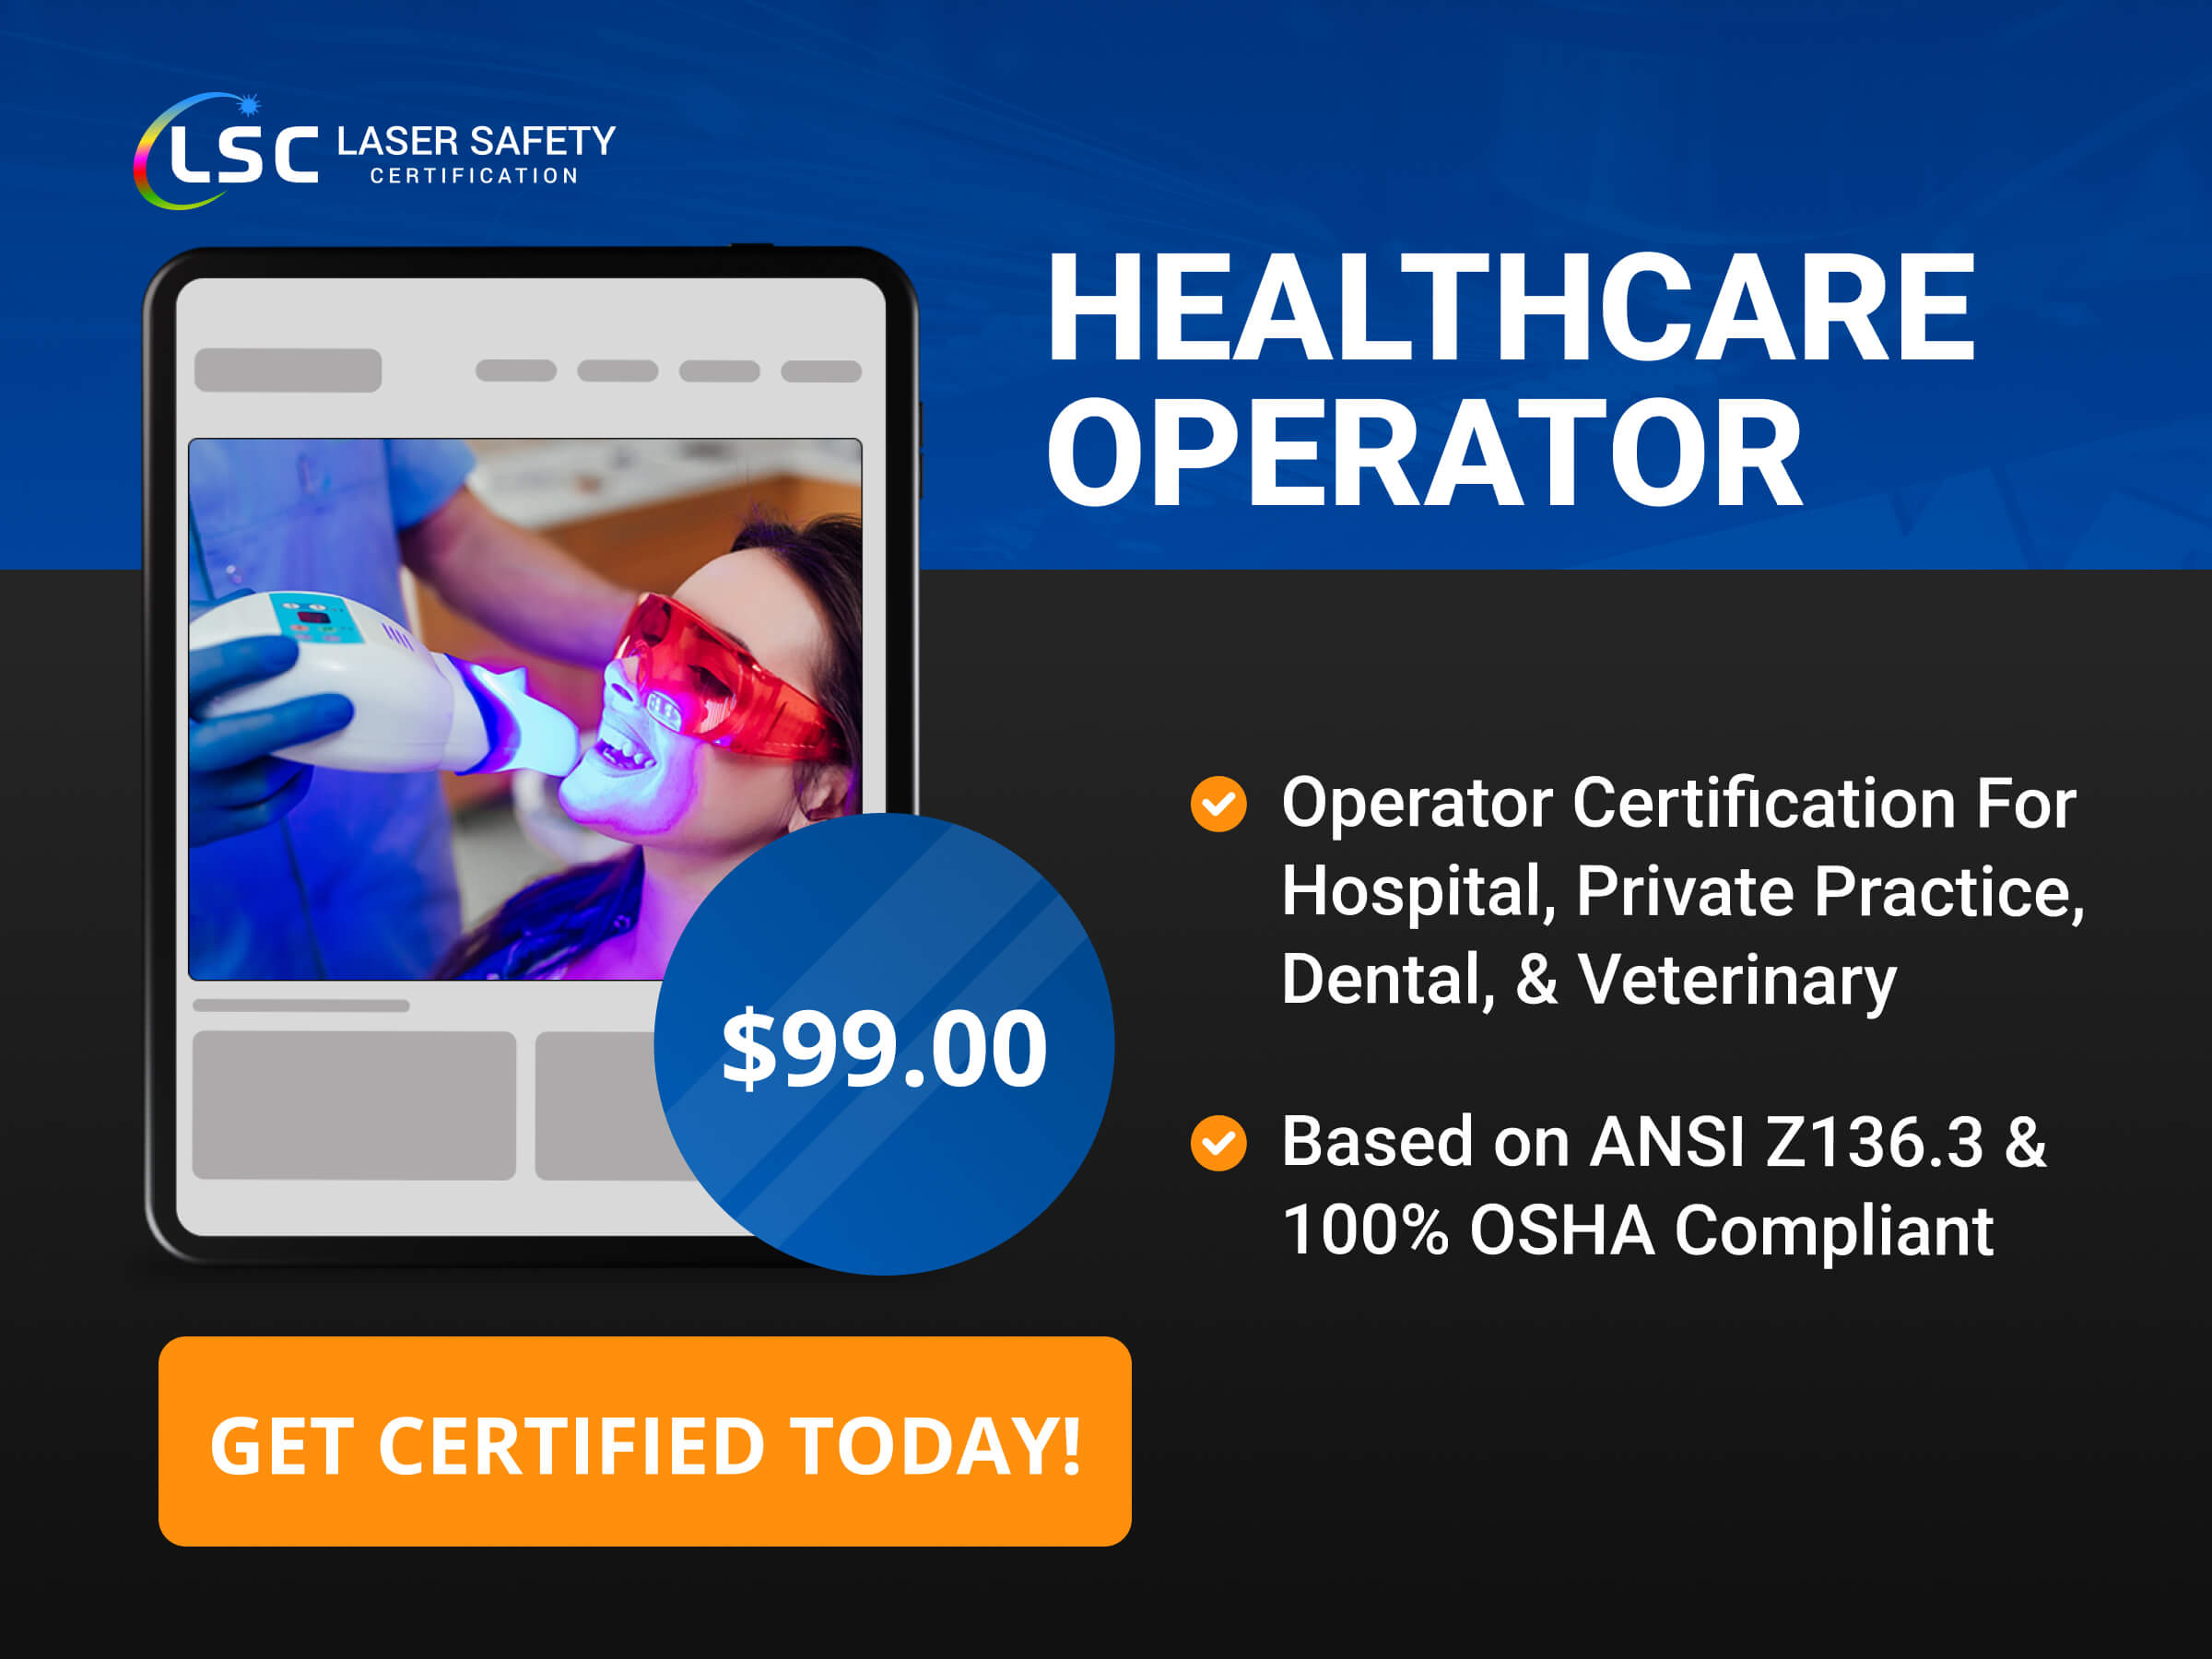 Lsc healthcare operator certification.